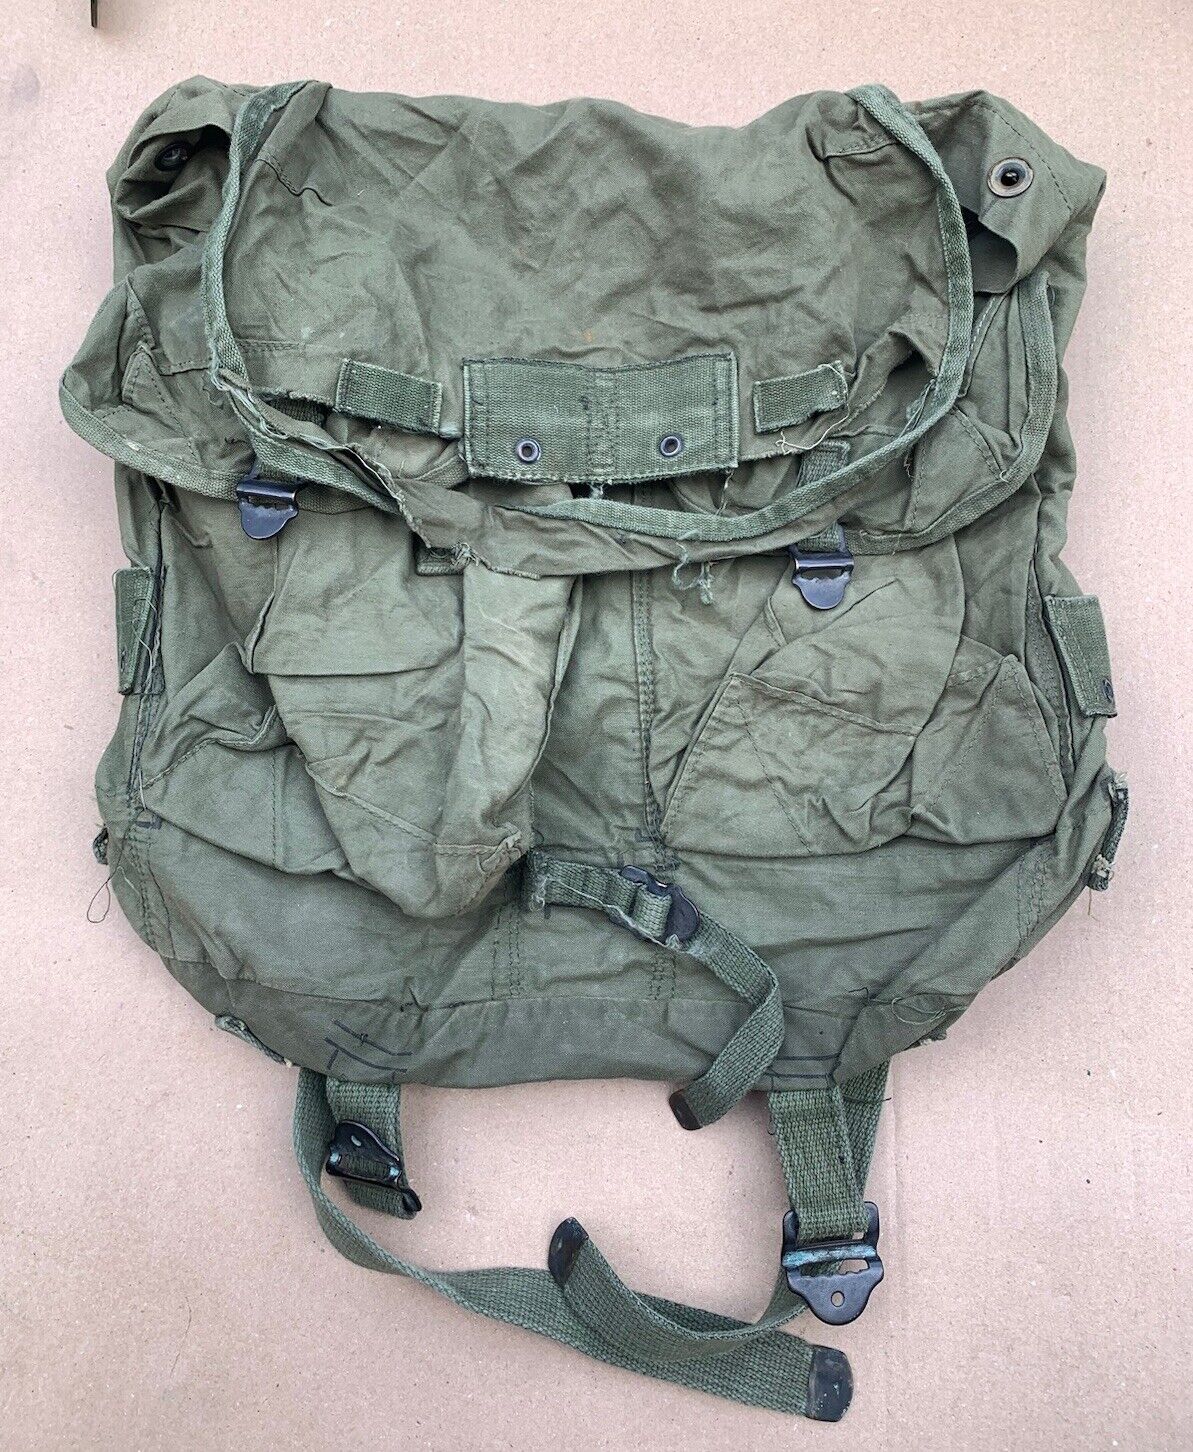 Vietnam Era ARVN Rucksack Backpack